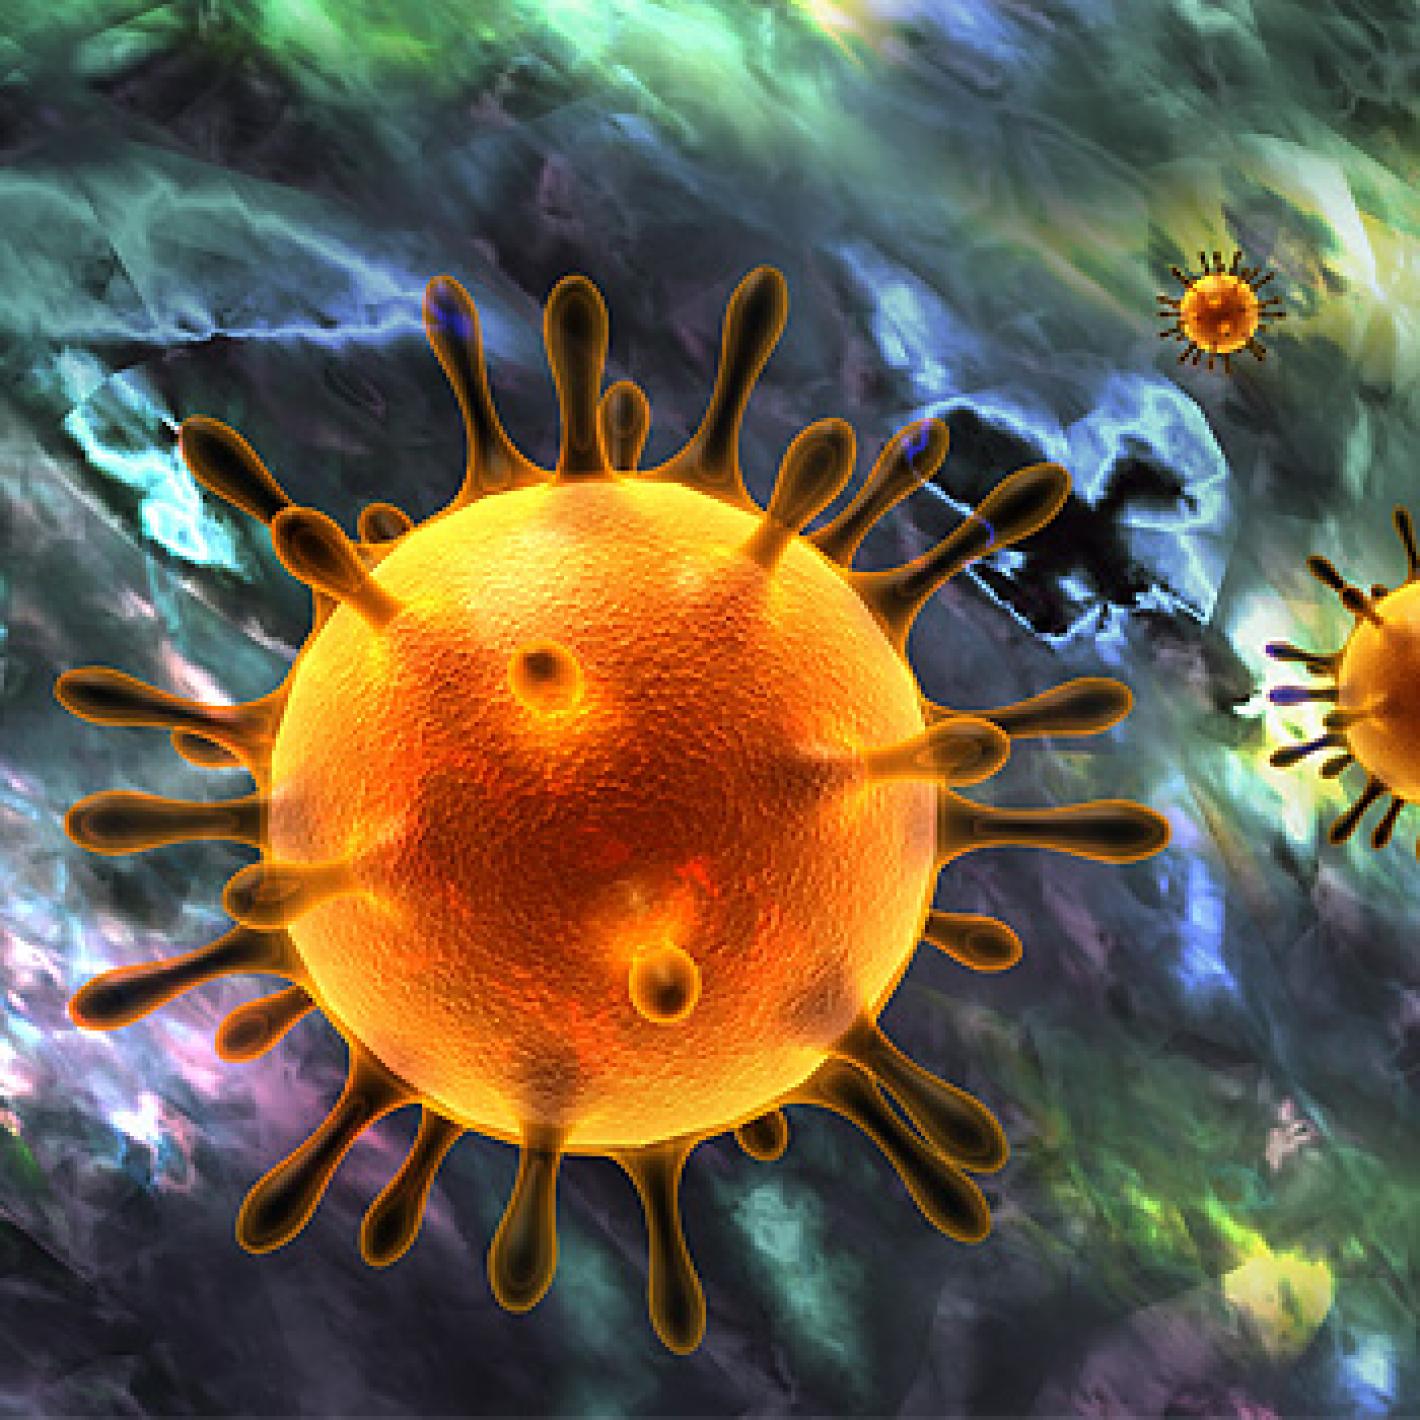 images/lombardia/jujitsu/medium/coronavirus.jpg